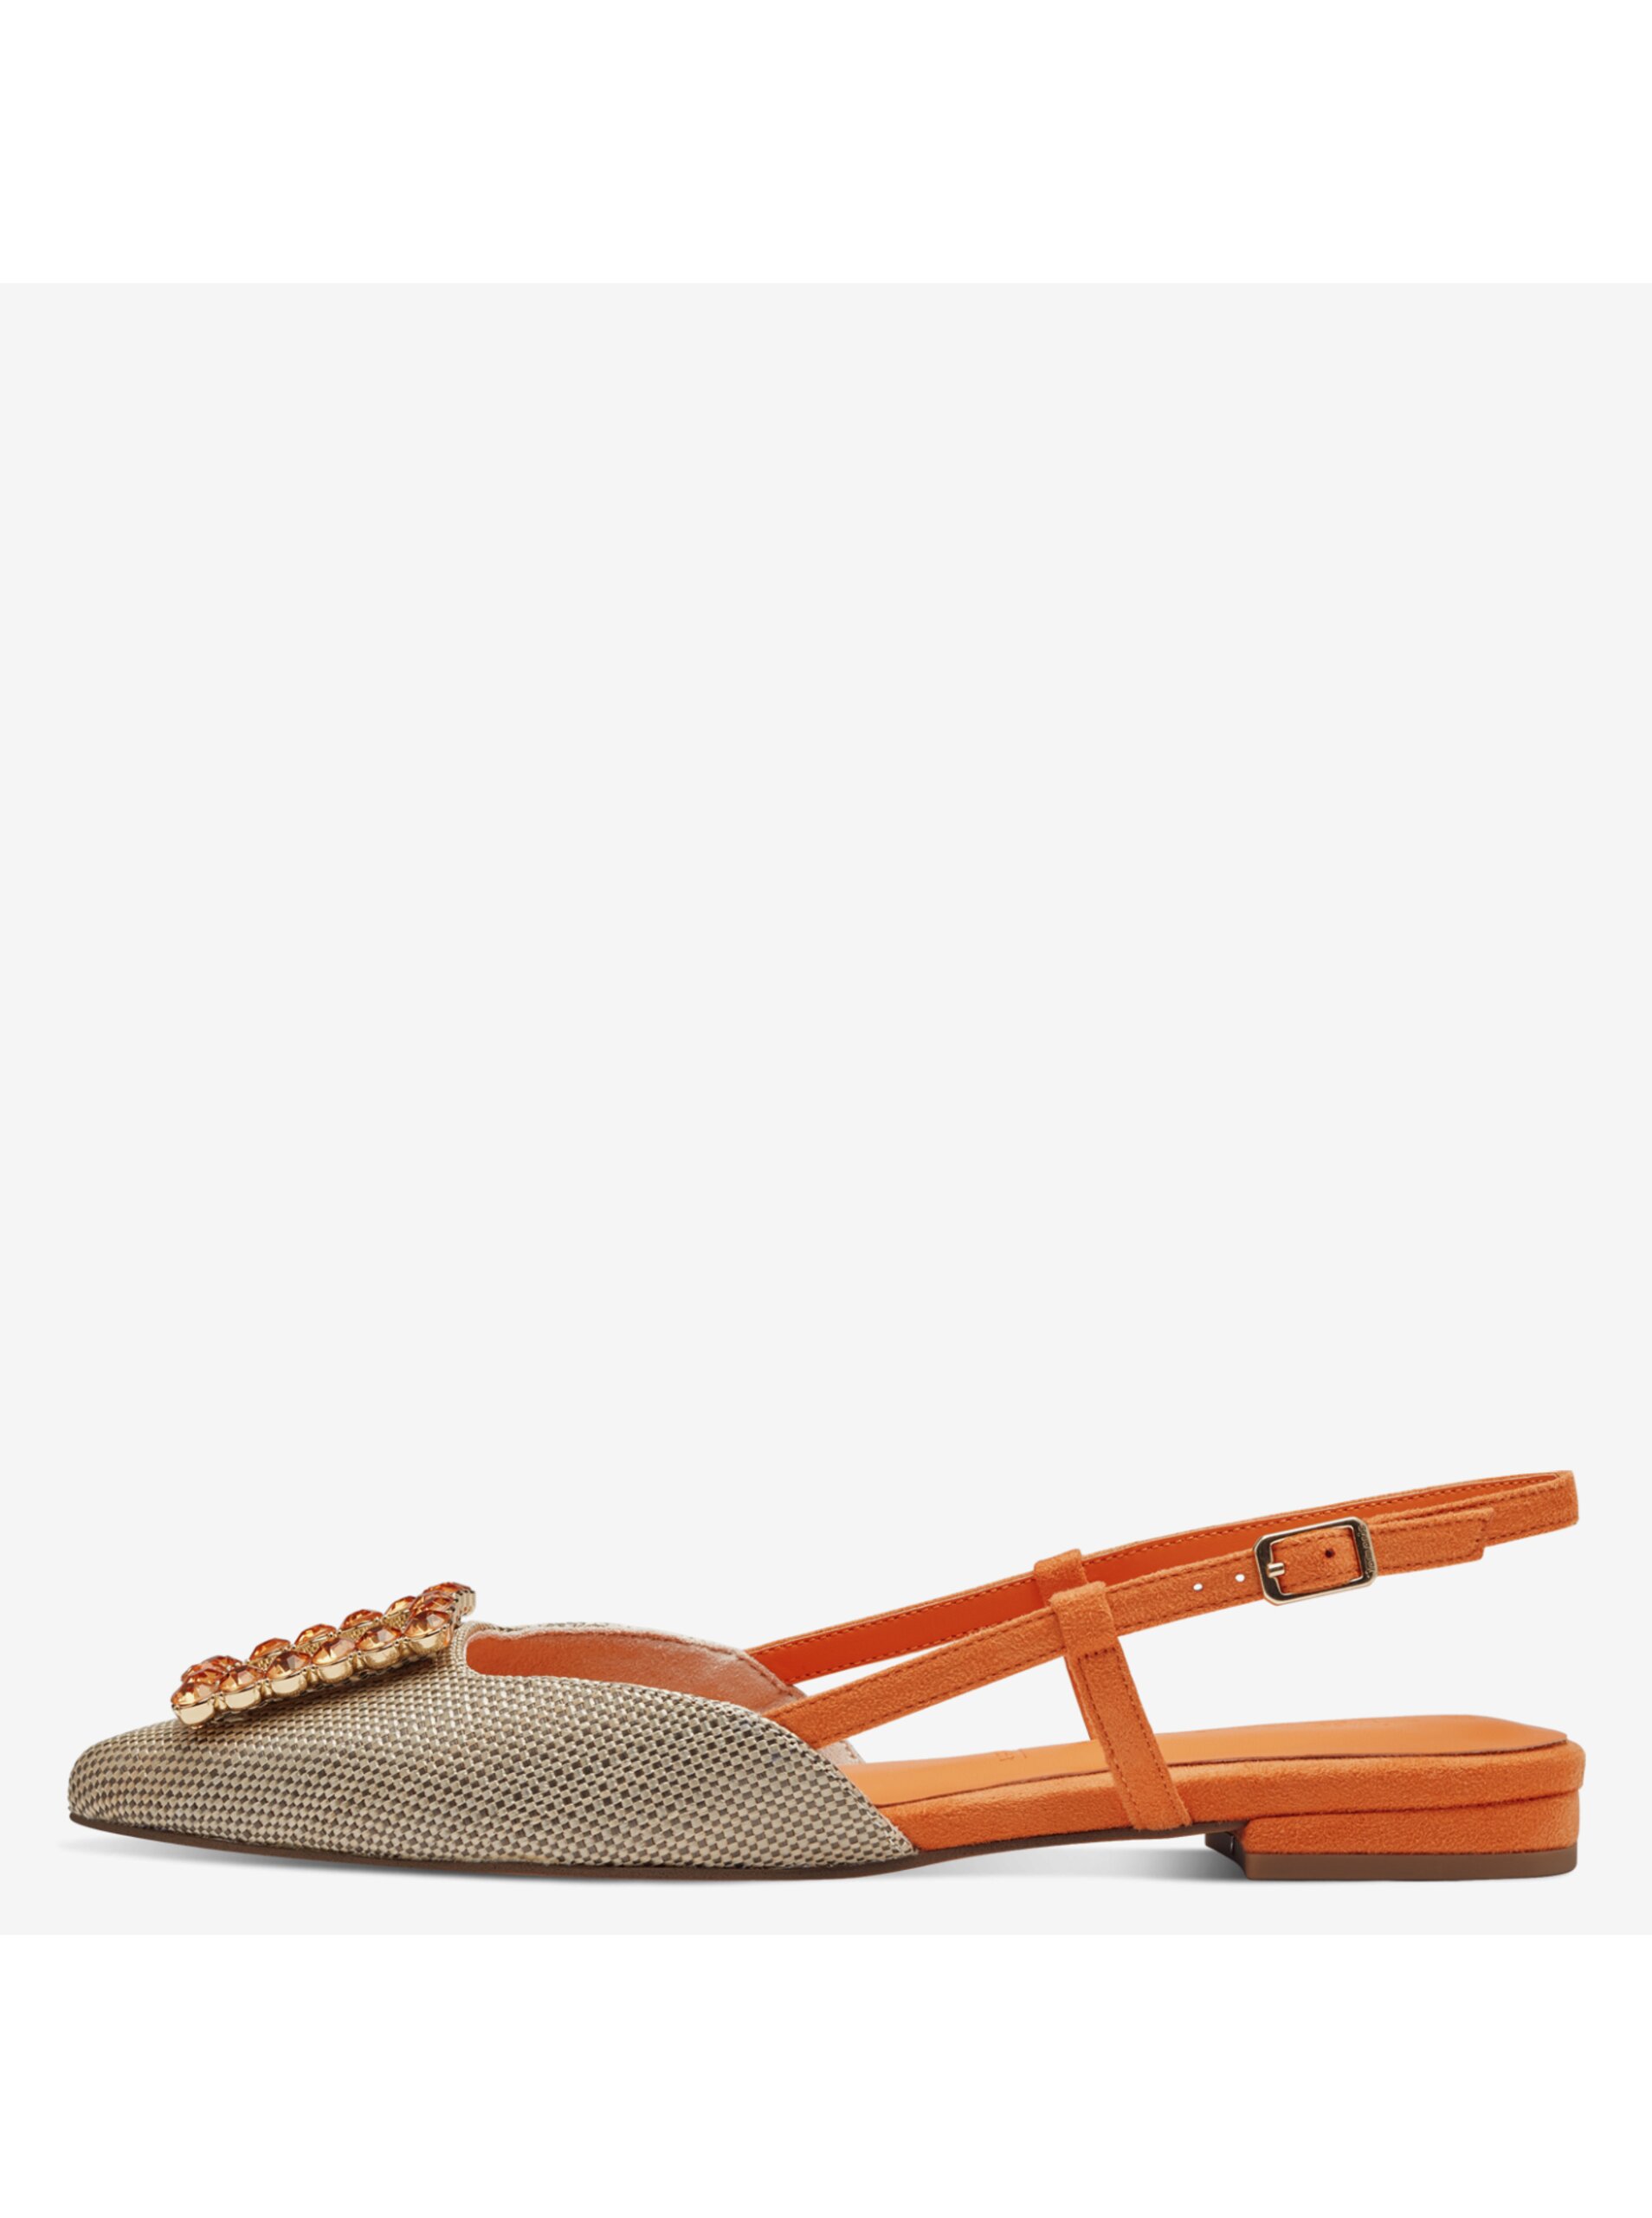 Tamaris women's orange-beige sandals - Women